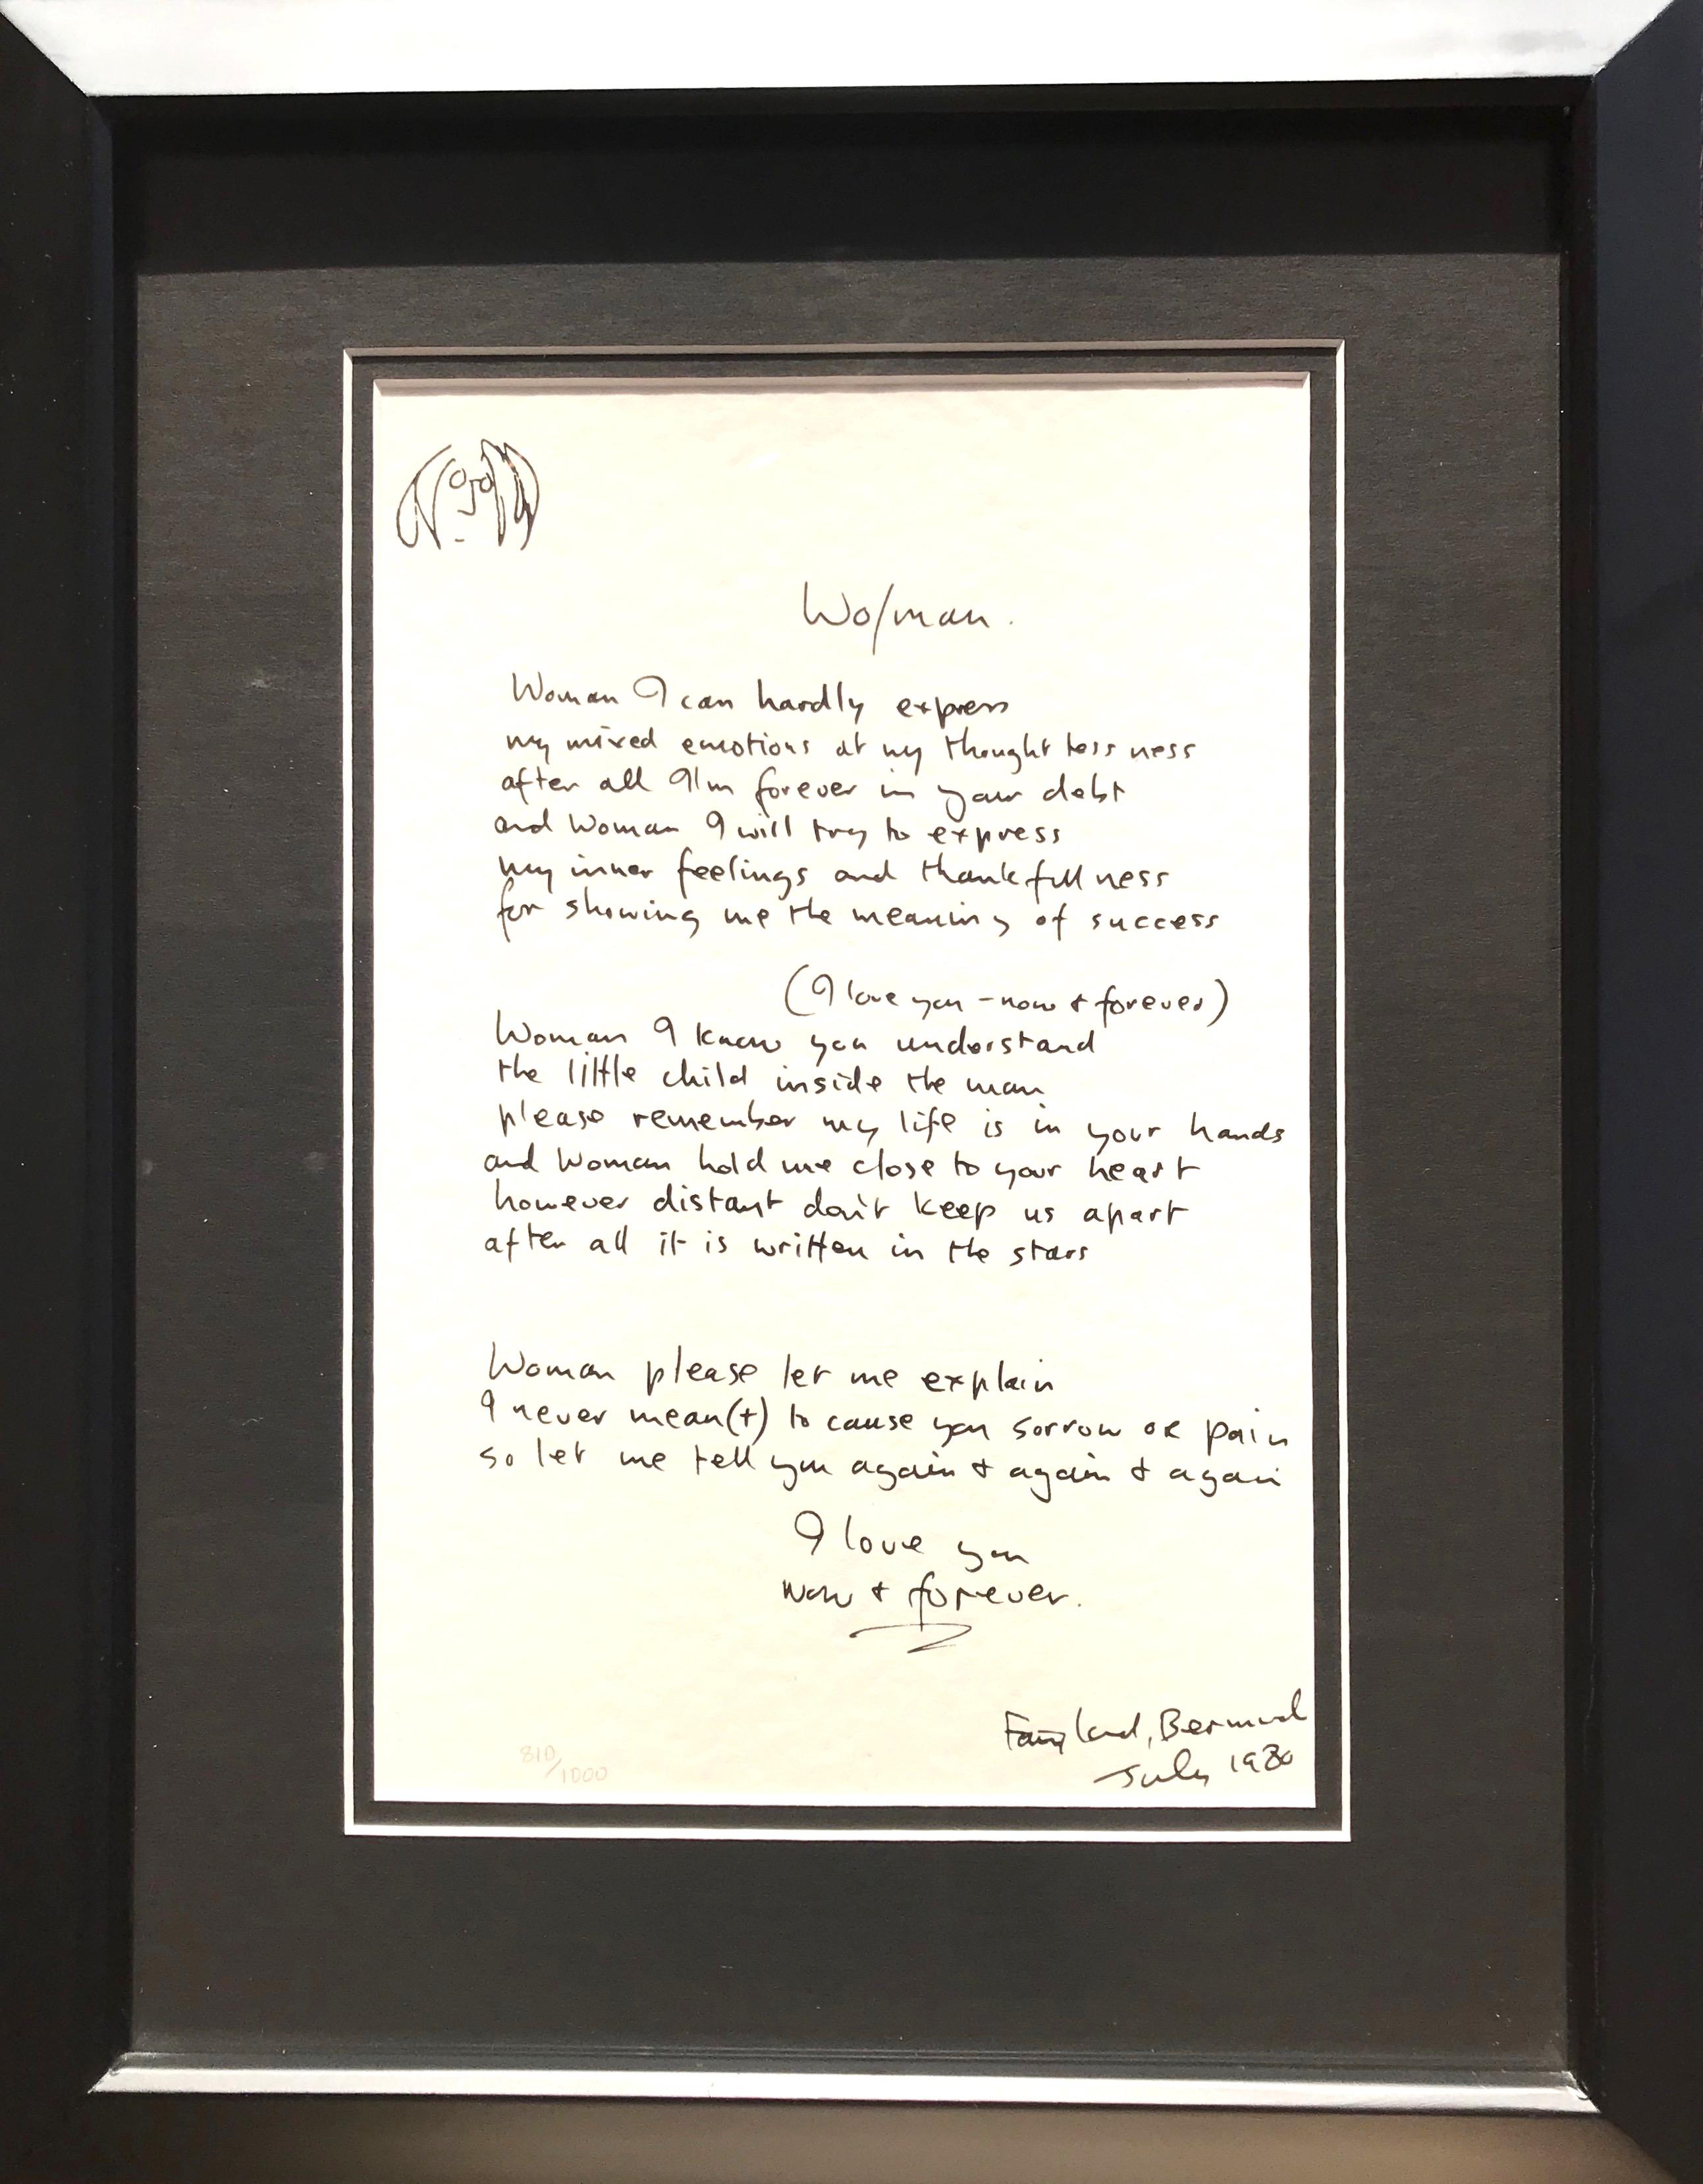 John Lennon Print - "Woman" Framed Limited Edition Hand Written Lyrics